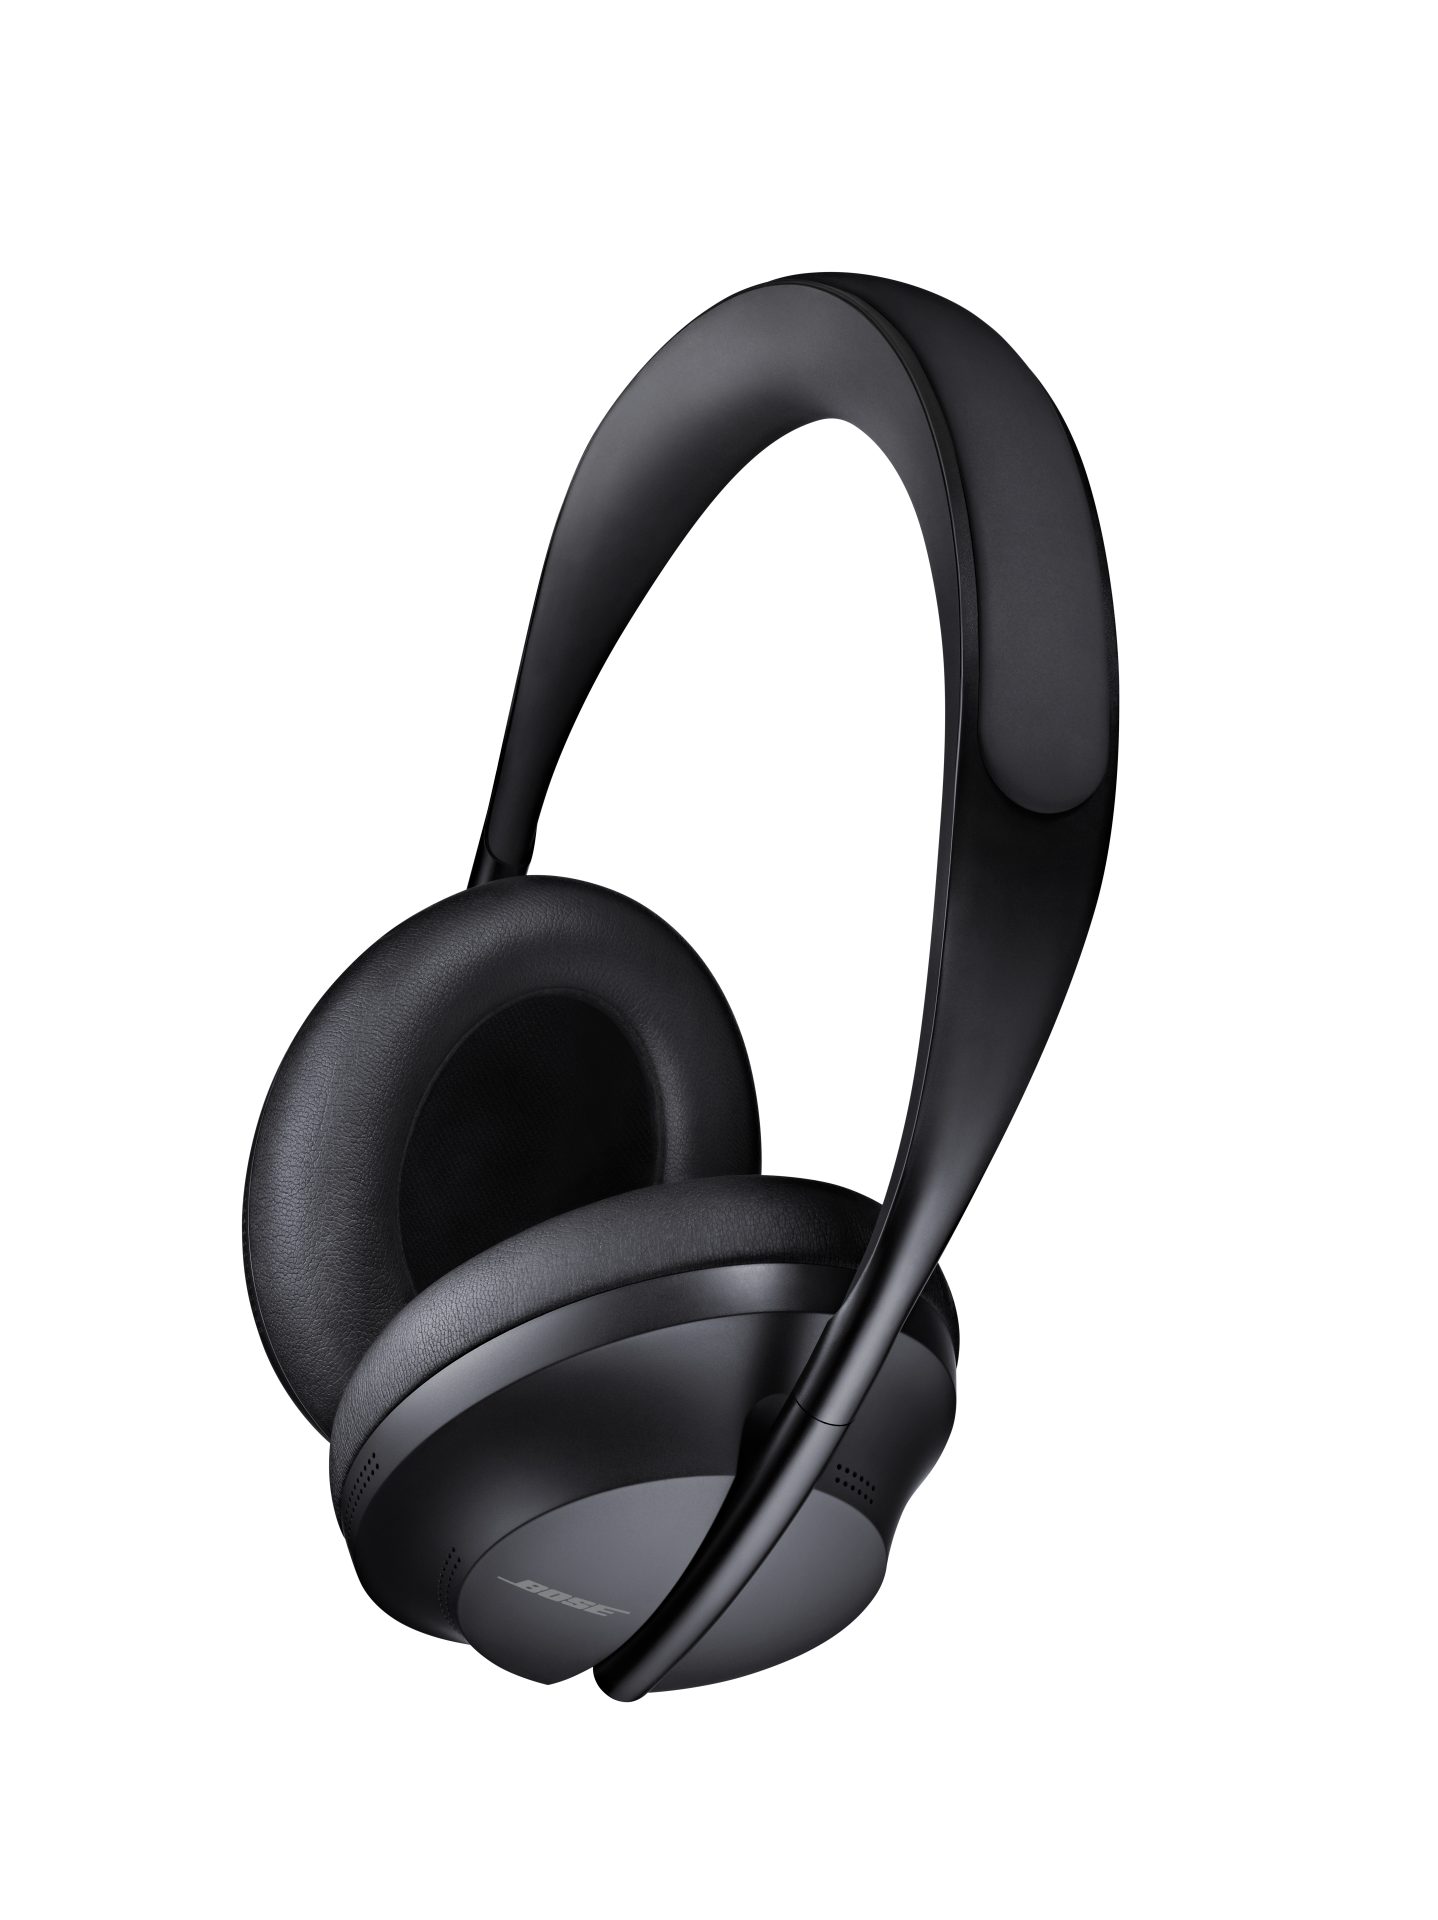 Bose Noise Cancelling Headphones 700 over-ear Wireless Bluetooth Earphones, Black - image 4 of 10